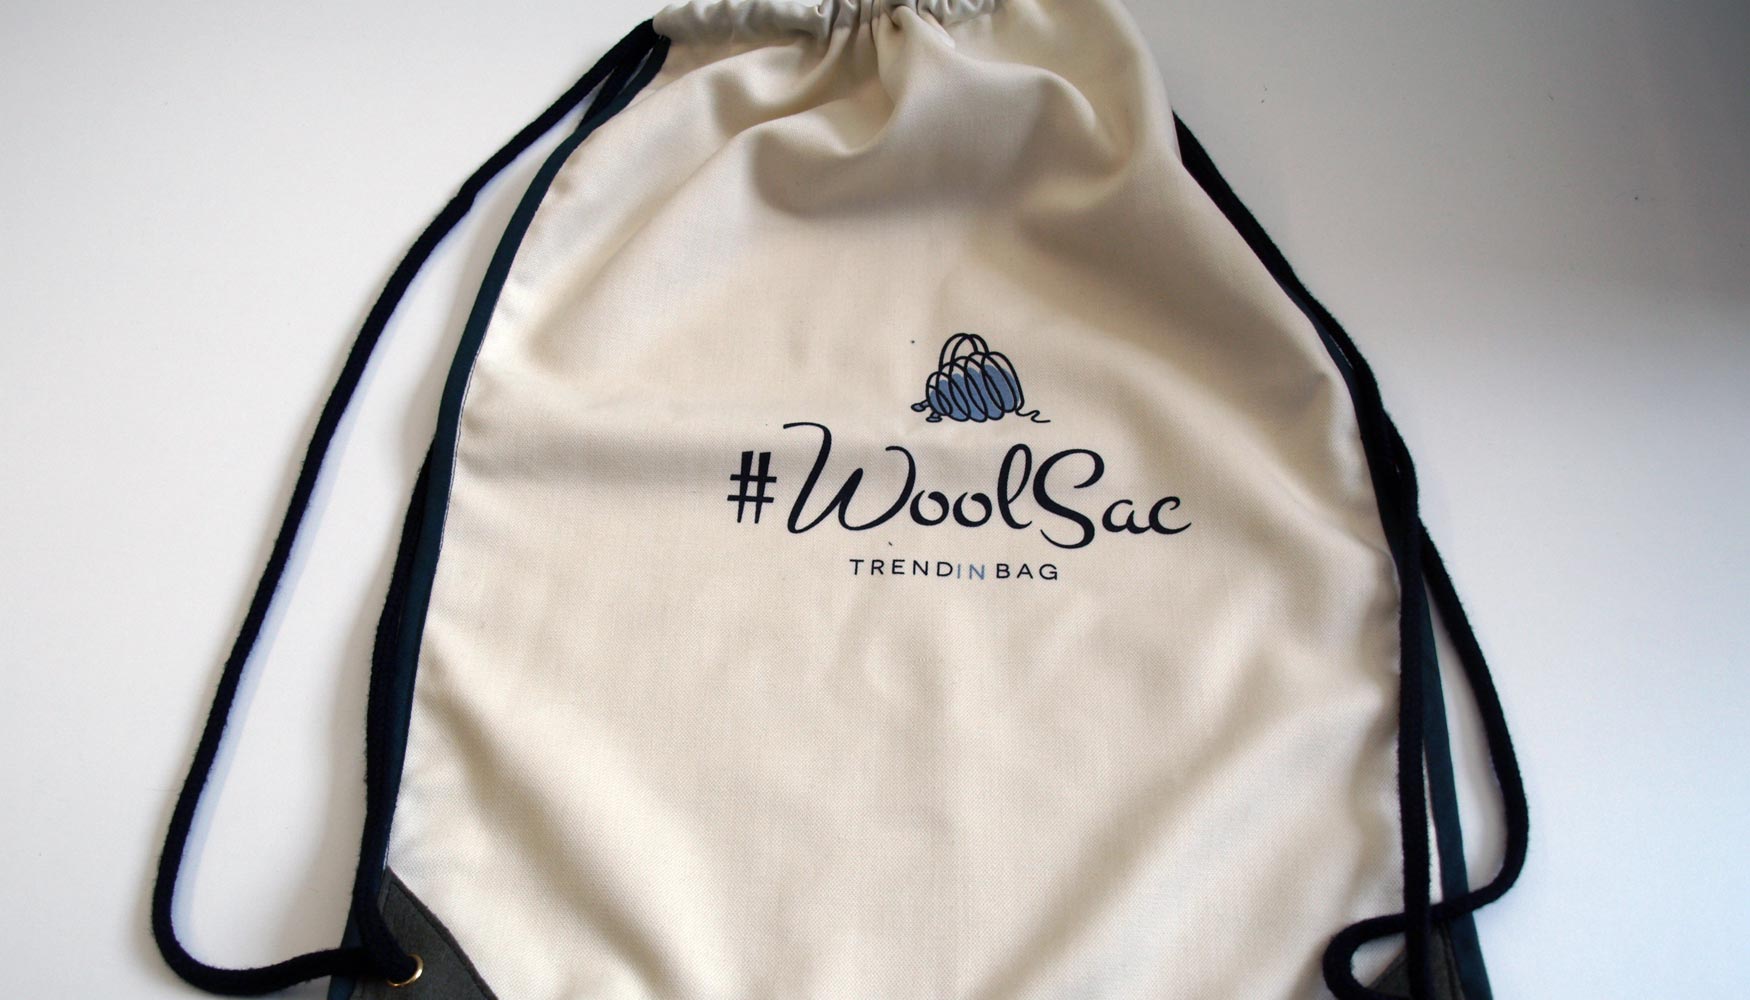 Bolsa de lana del proyecto Woolsac